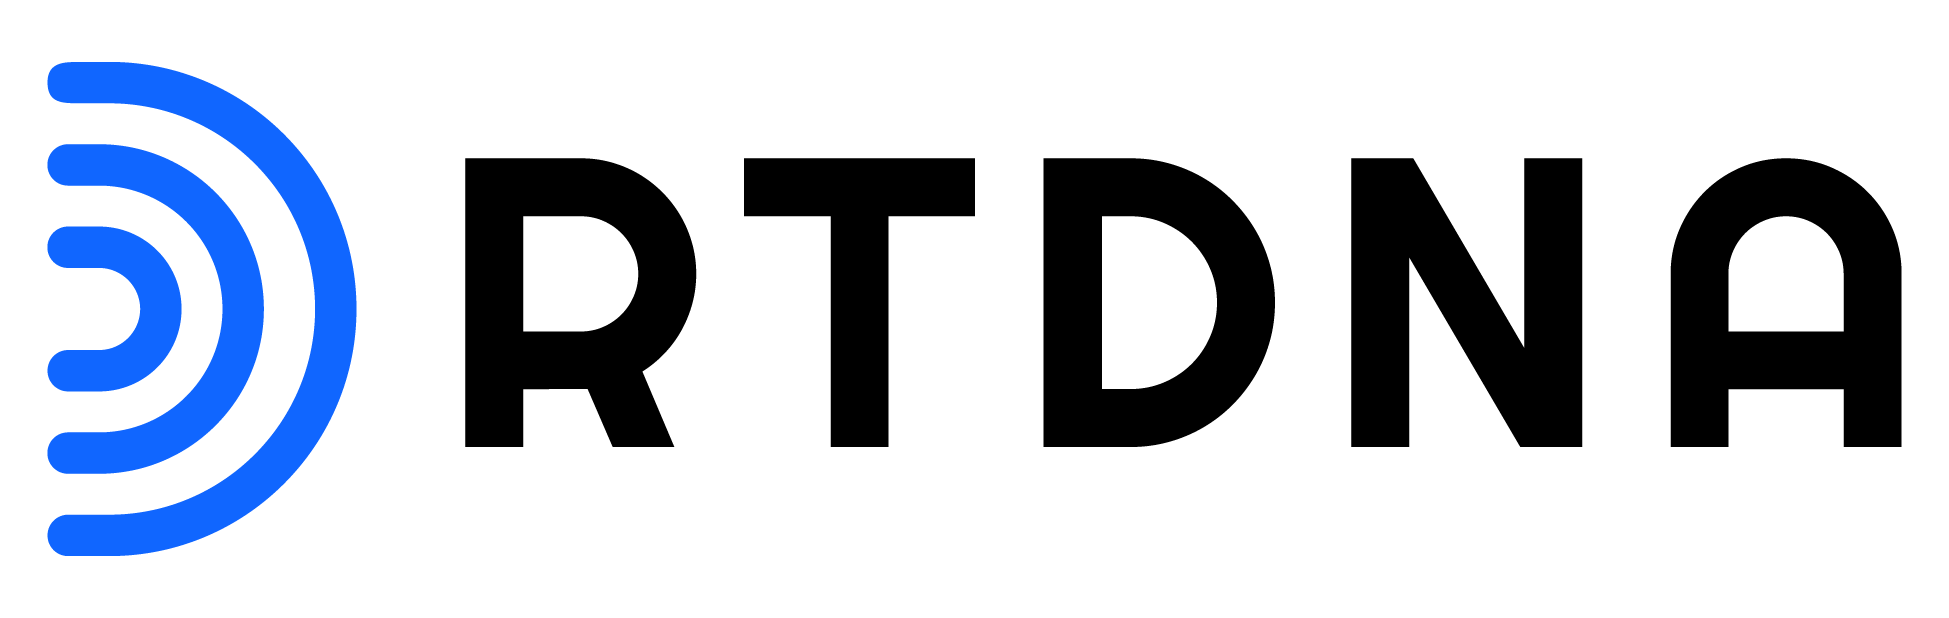 RTDNA logo